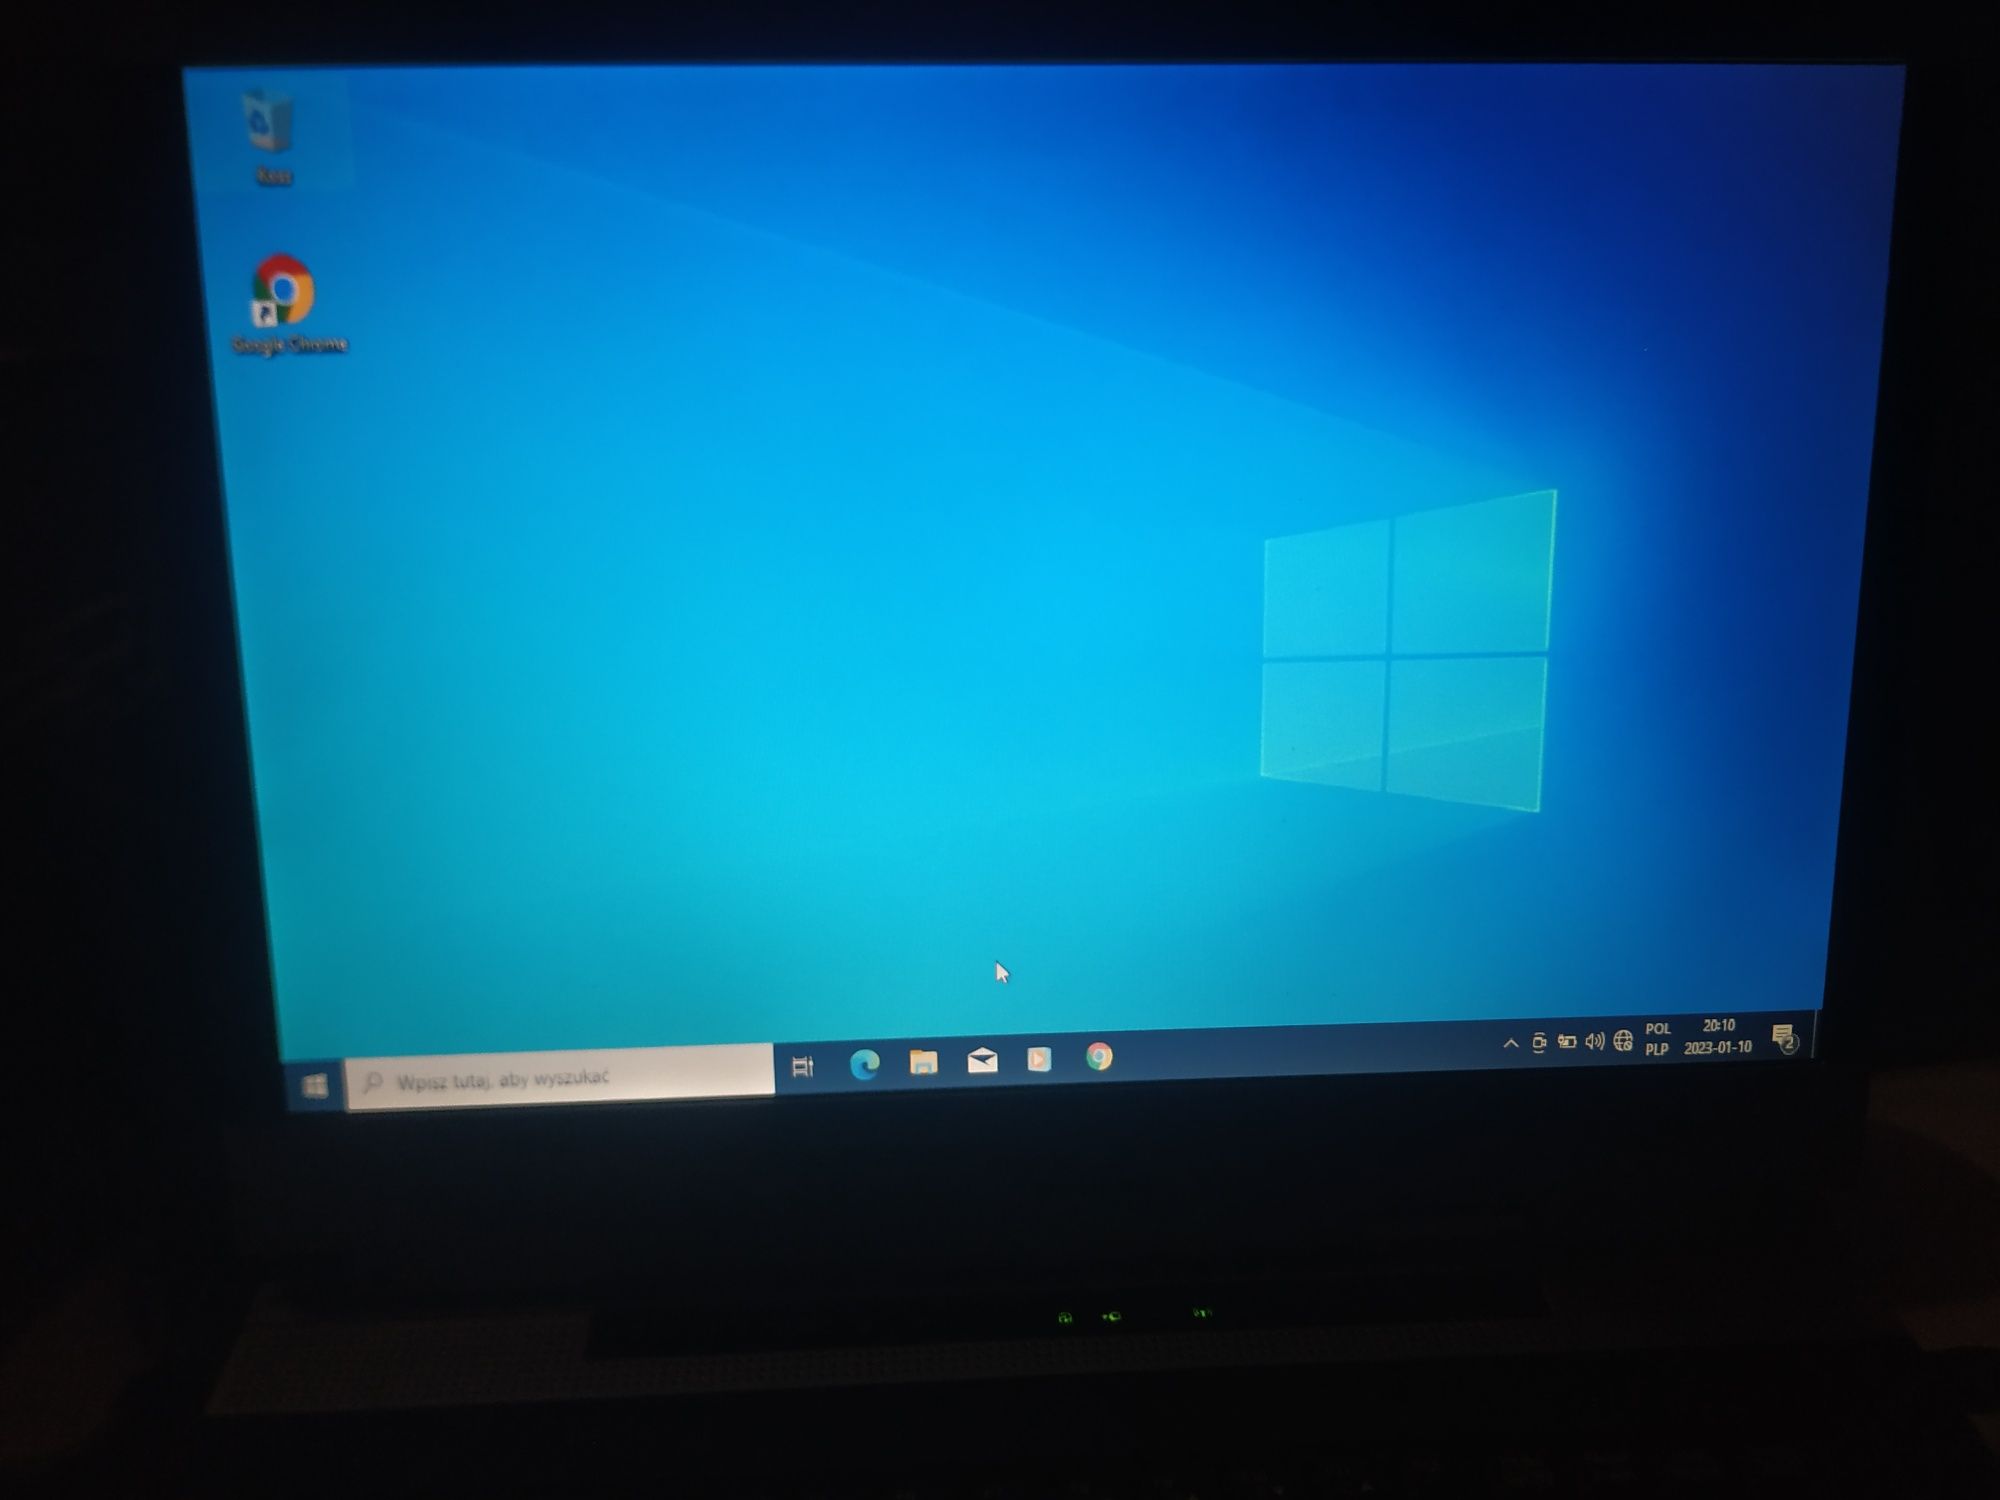 Laptop Fujitsu Siemens, Windows 10